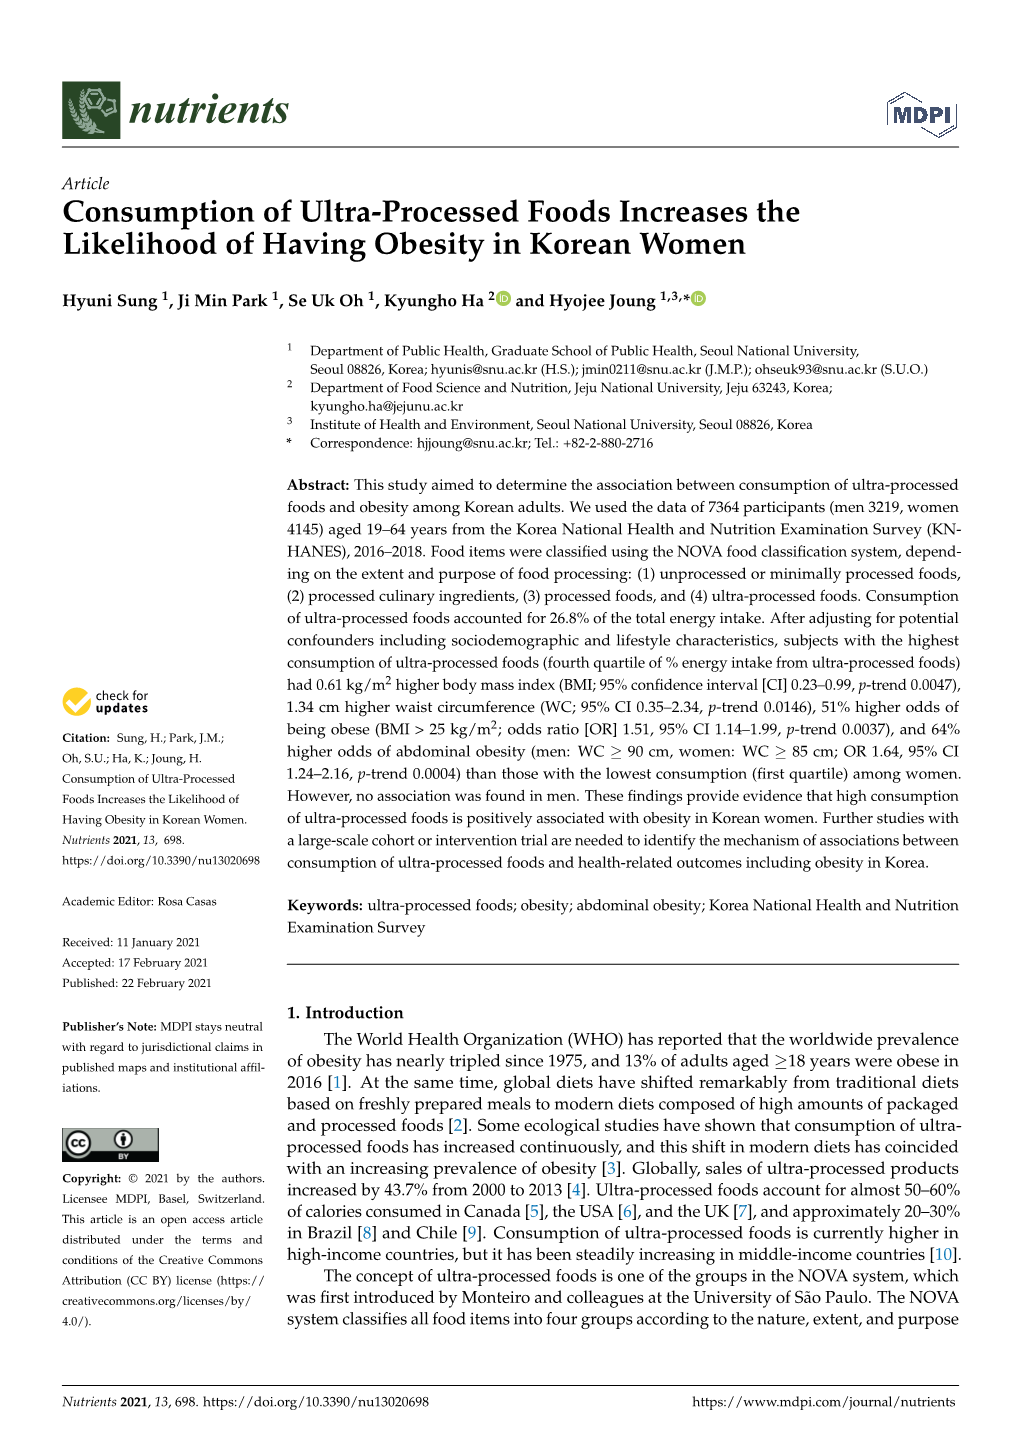 Consumption of Ultra-Processed Foods Increases the Likelihood of Having Obesity in Korean Women